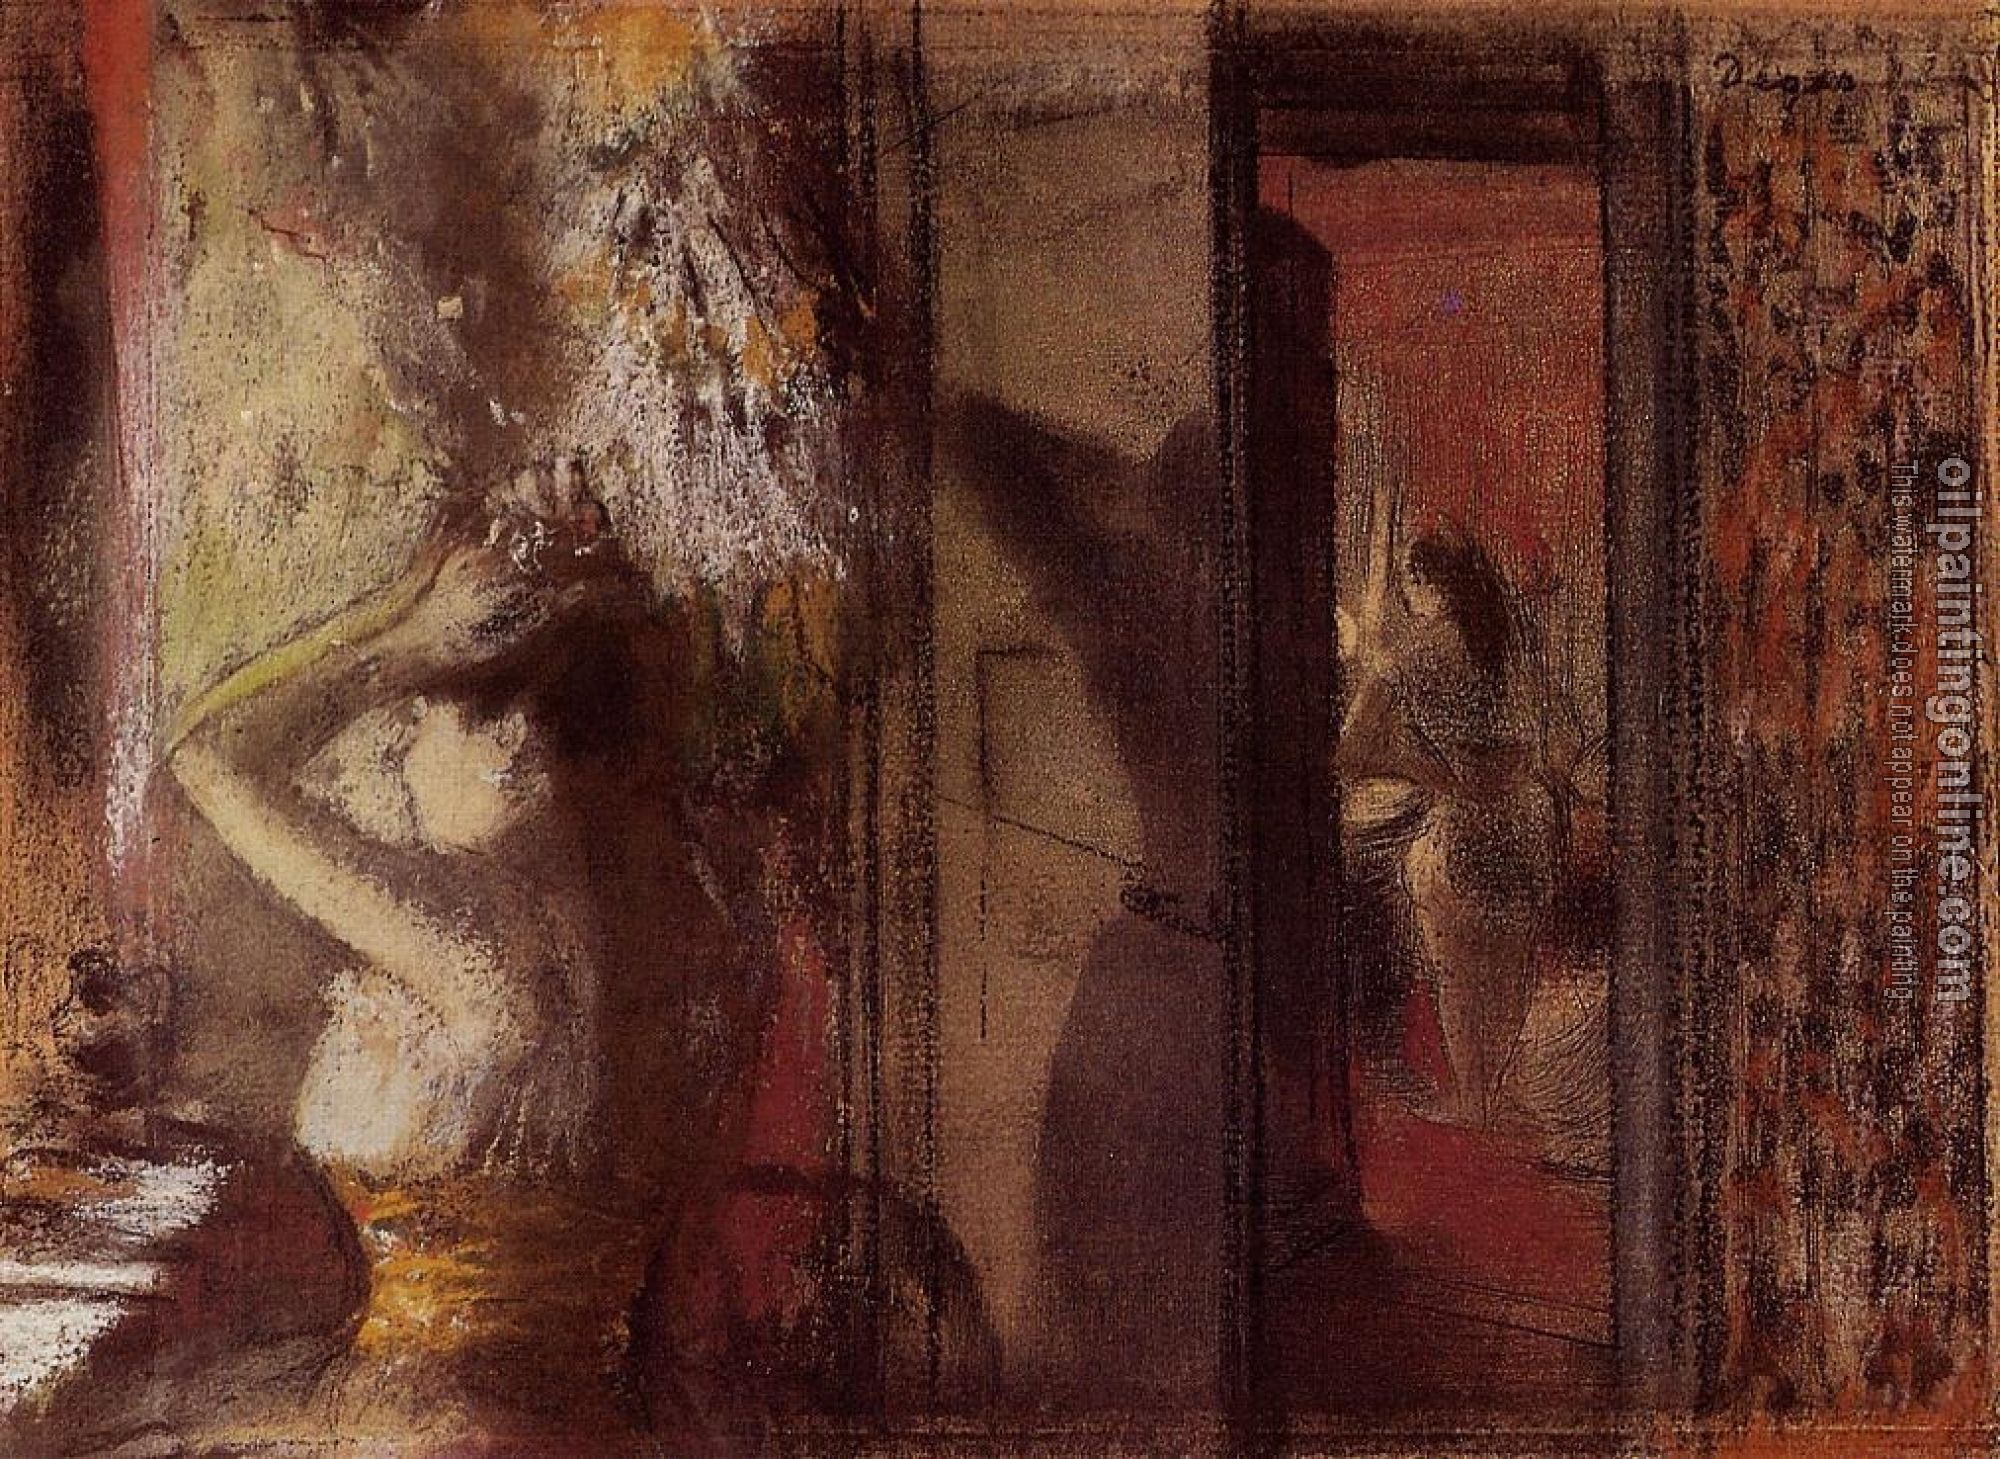 Degas, Edgar - The Actresses Dressing Room